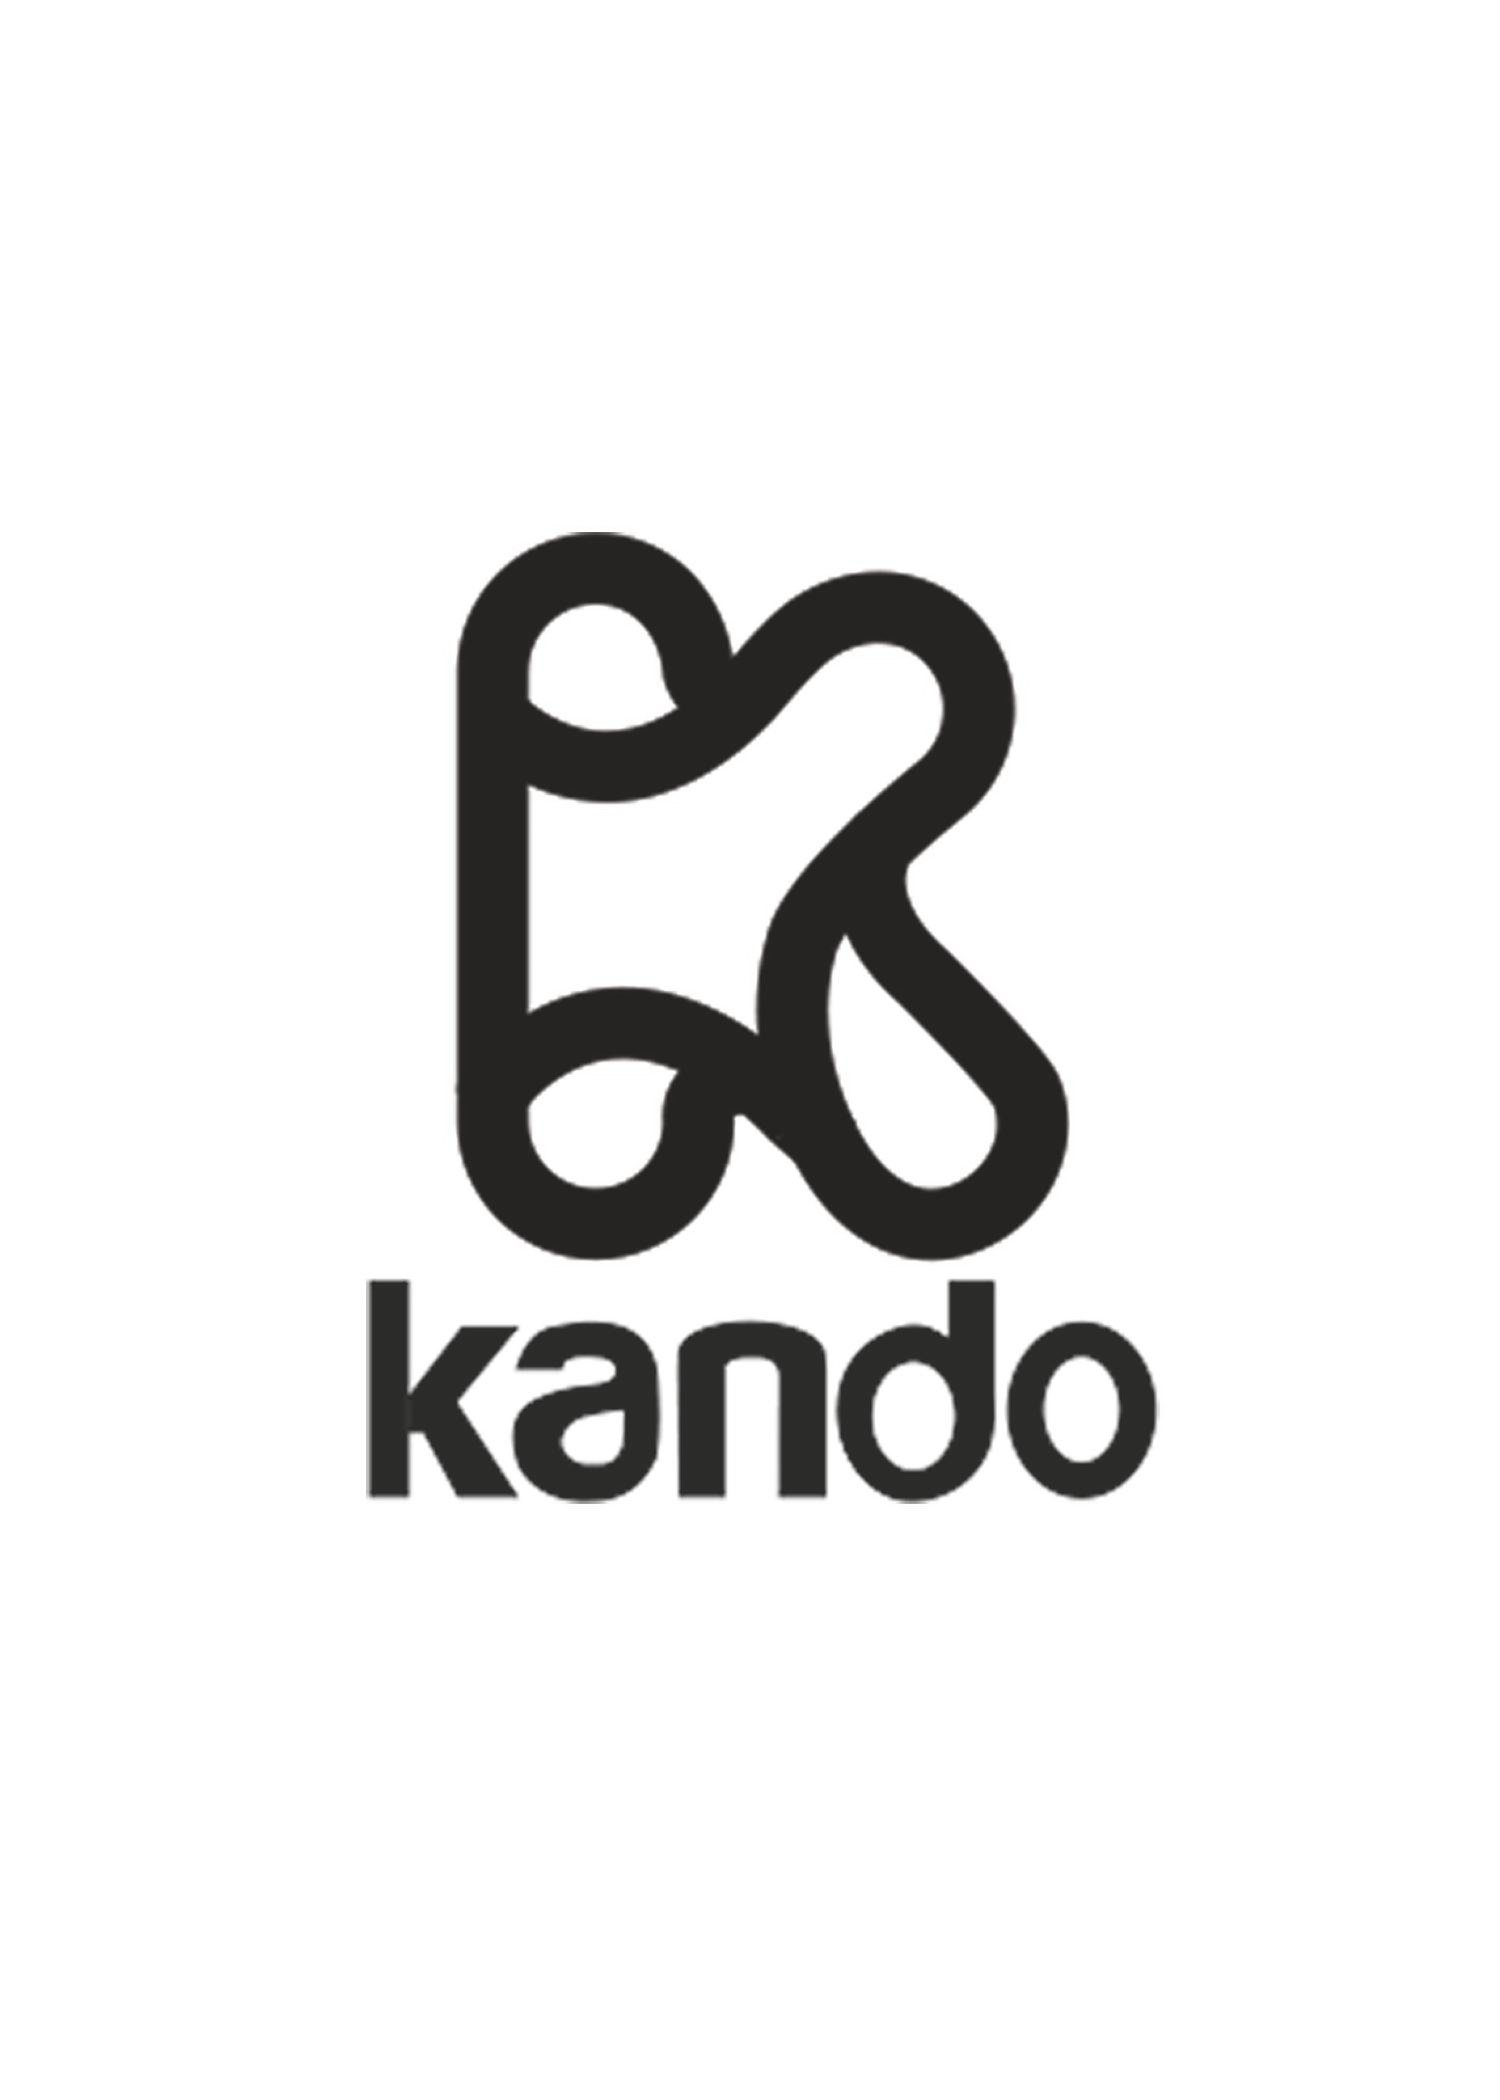  K KANDO